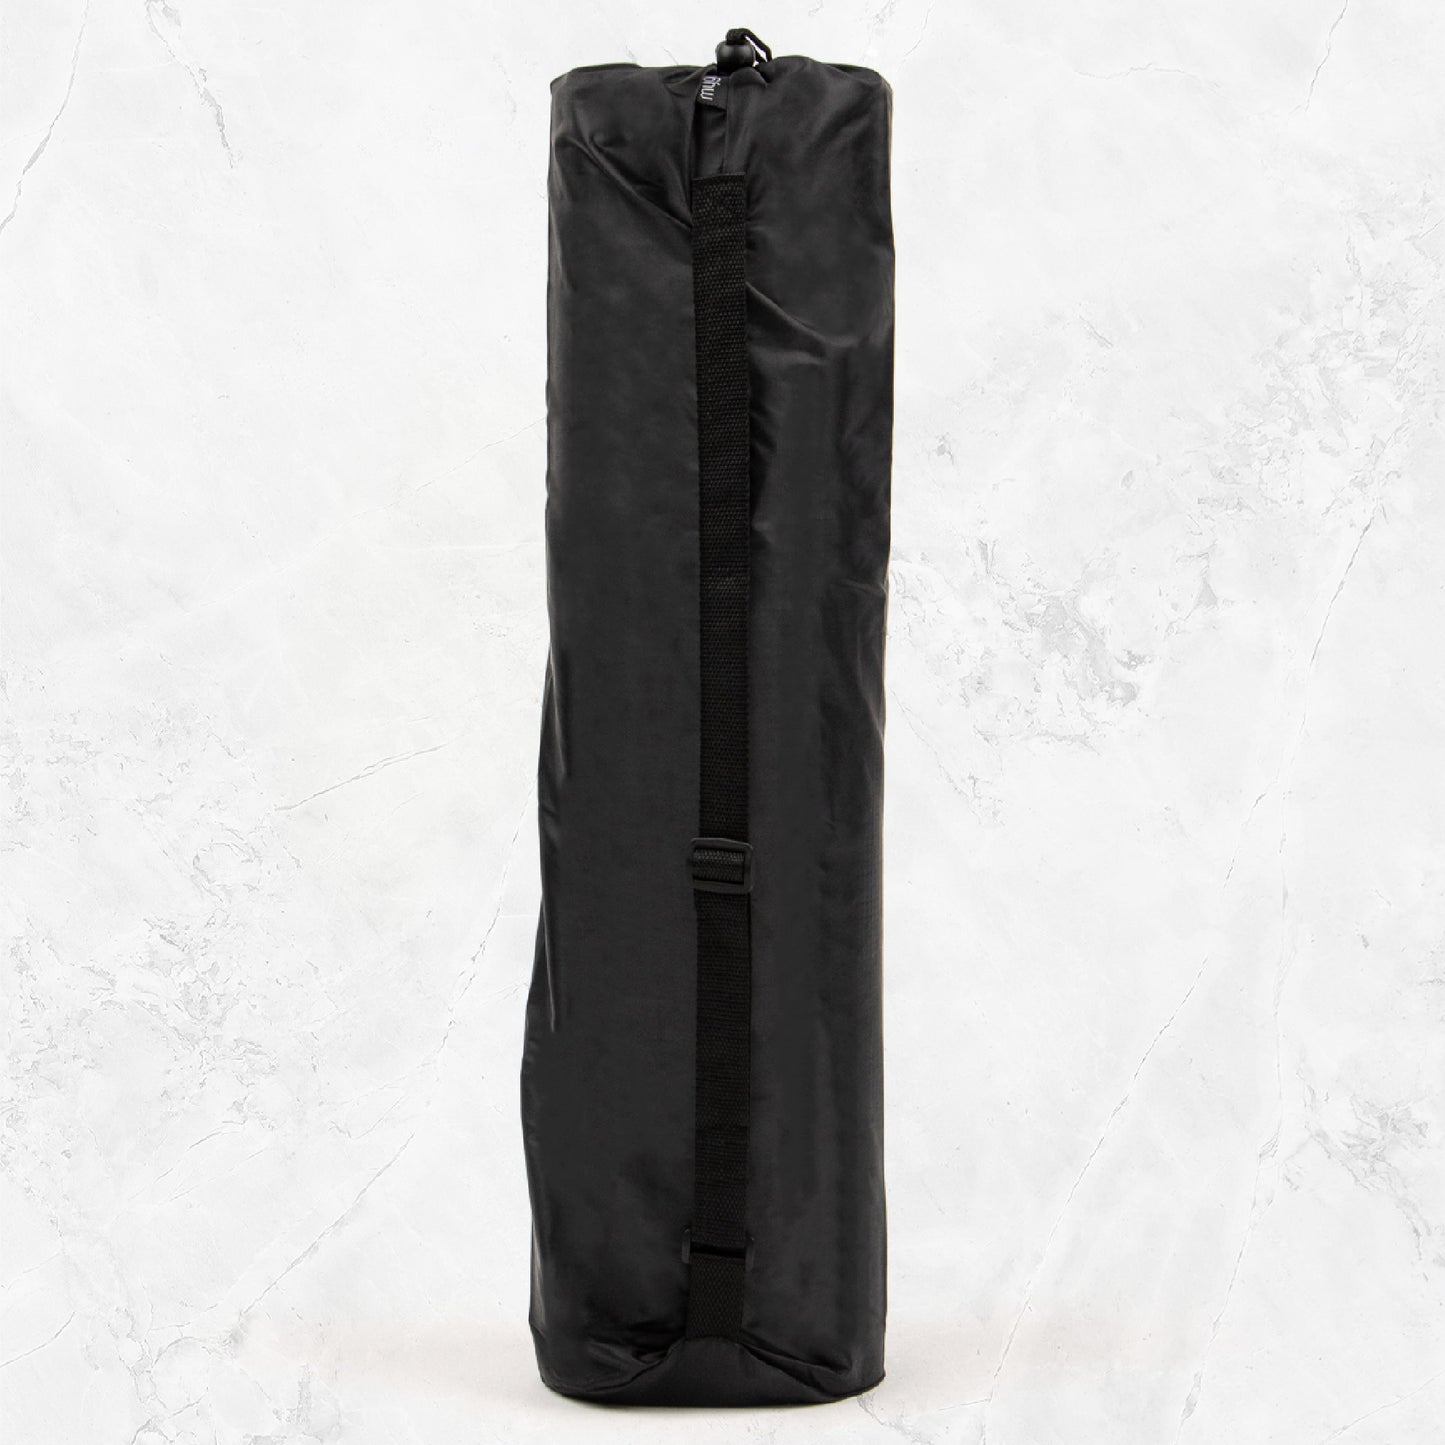 Yoga Mat Carry Bag - Black